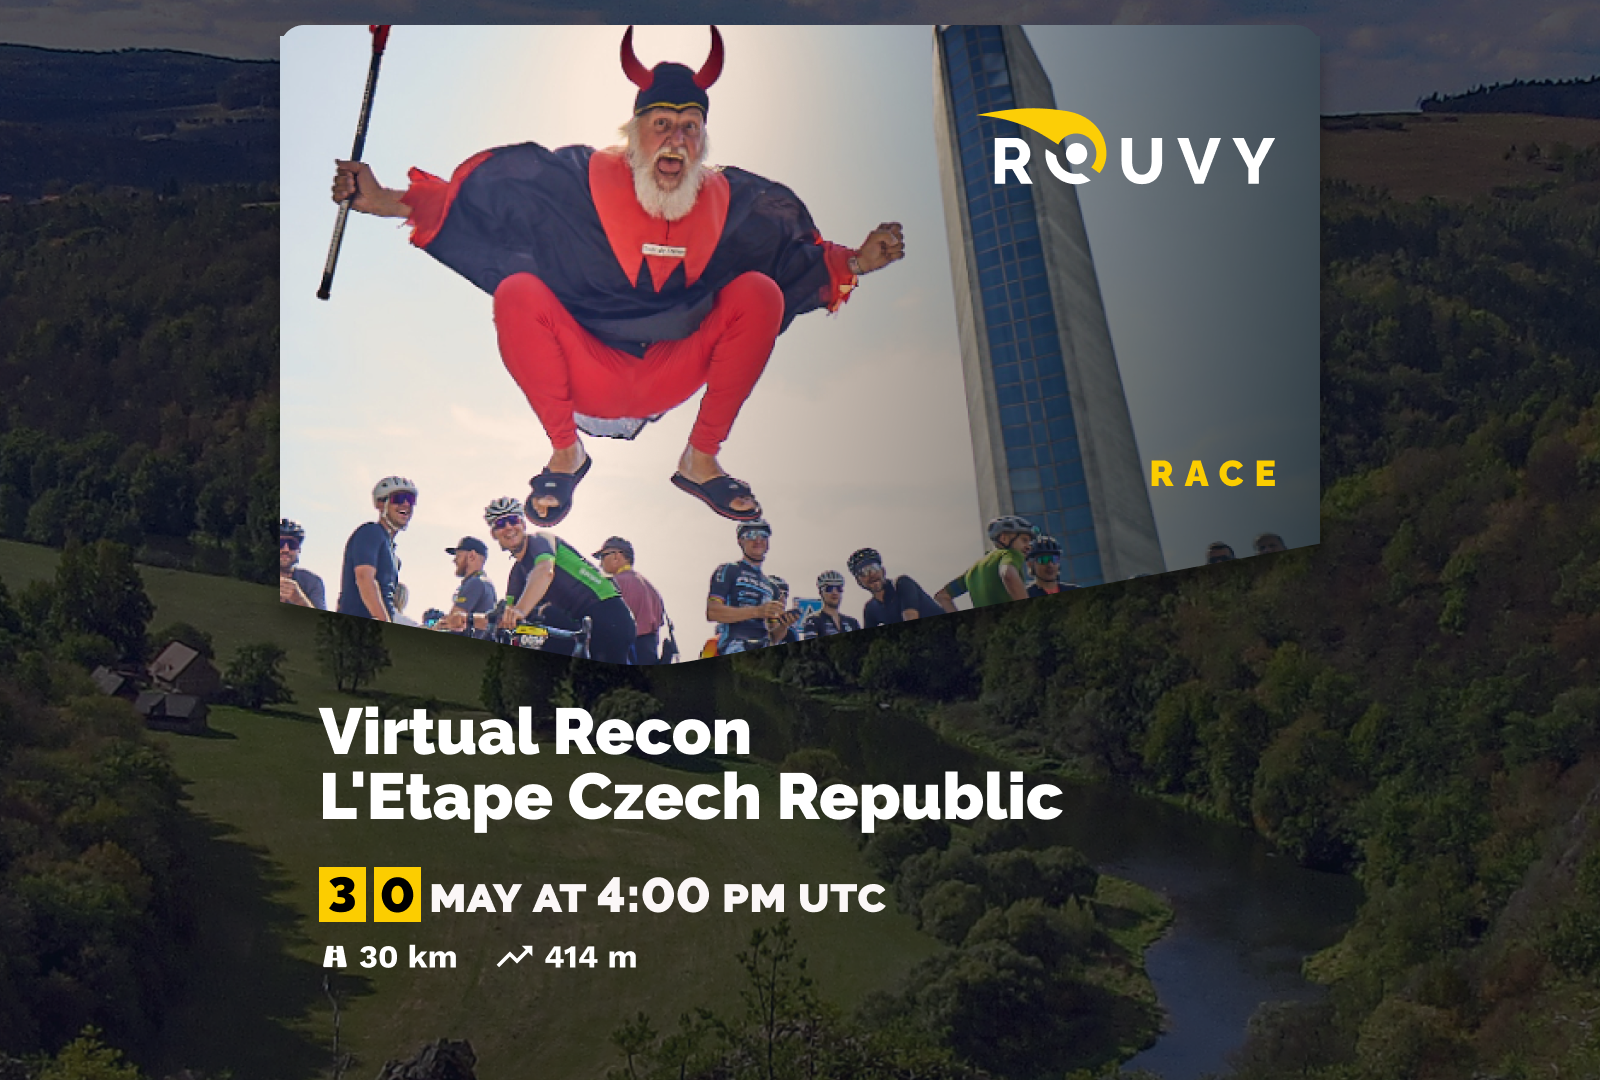 L'Etape Czech Republic - Virtual Recon